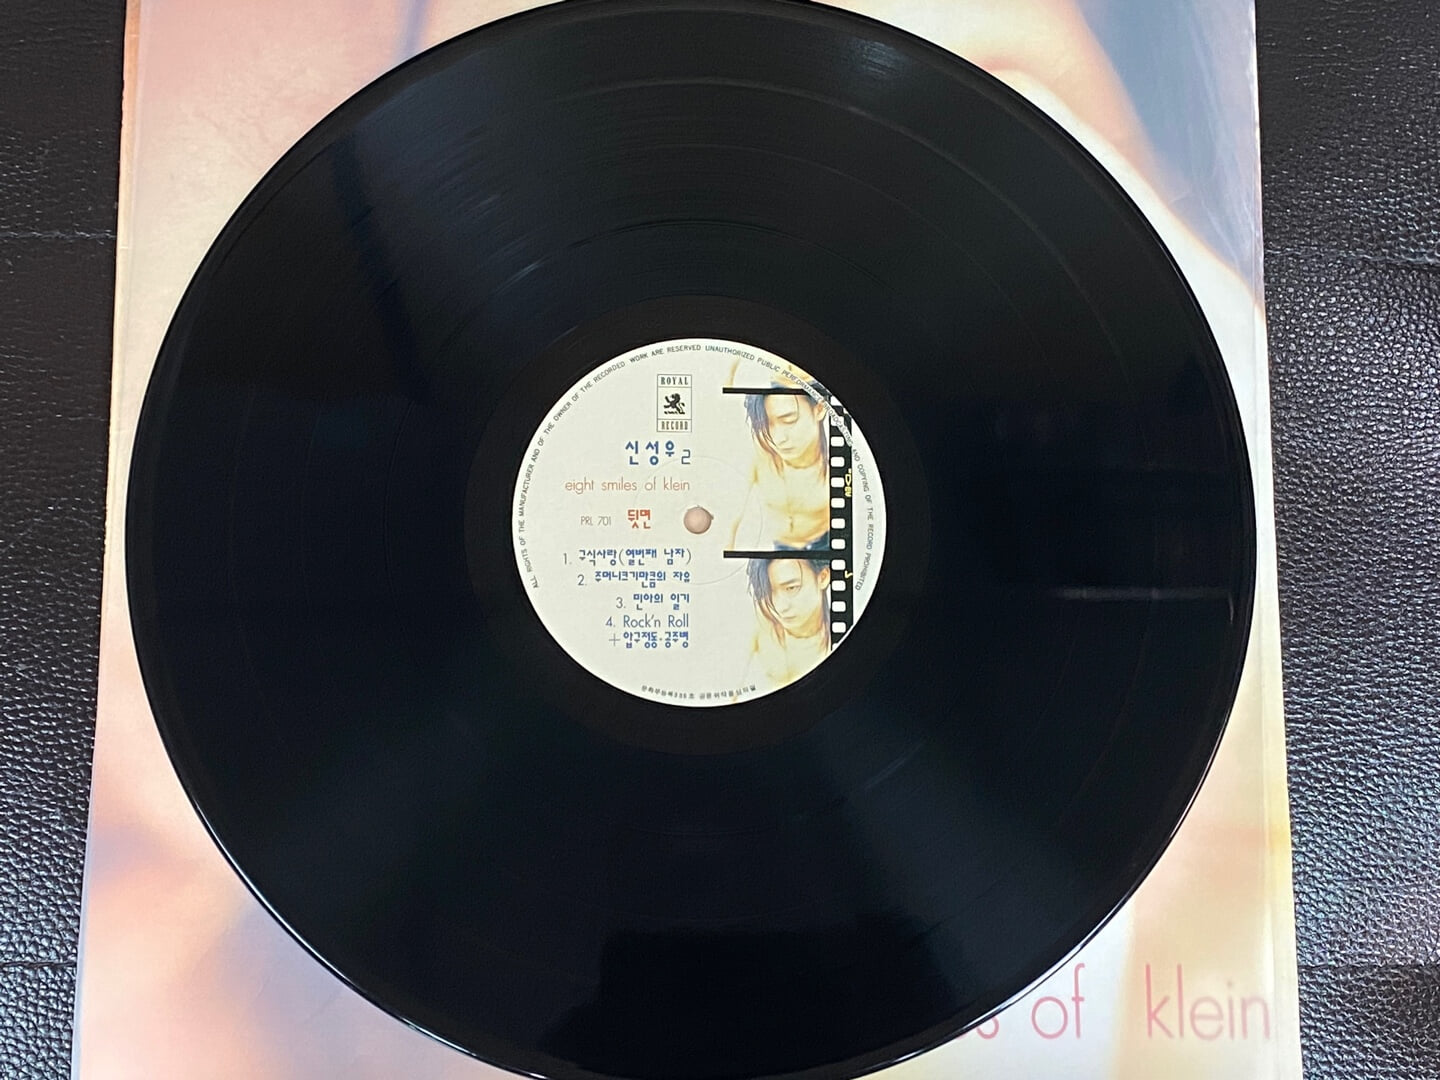 [LP] 신성우 - 2집 Eight Smiles Of Klein LP [로얄레코드 PRL-701]